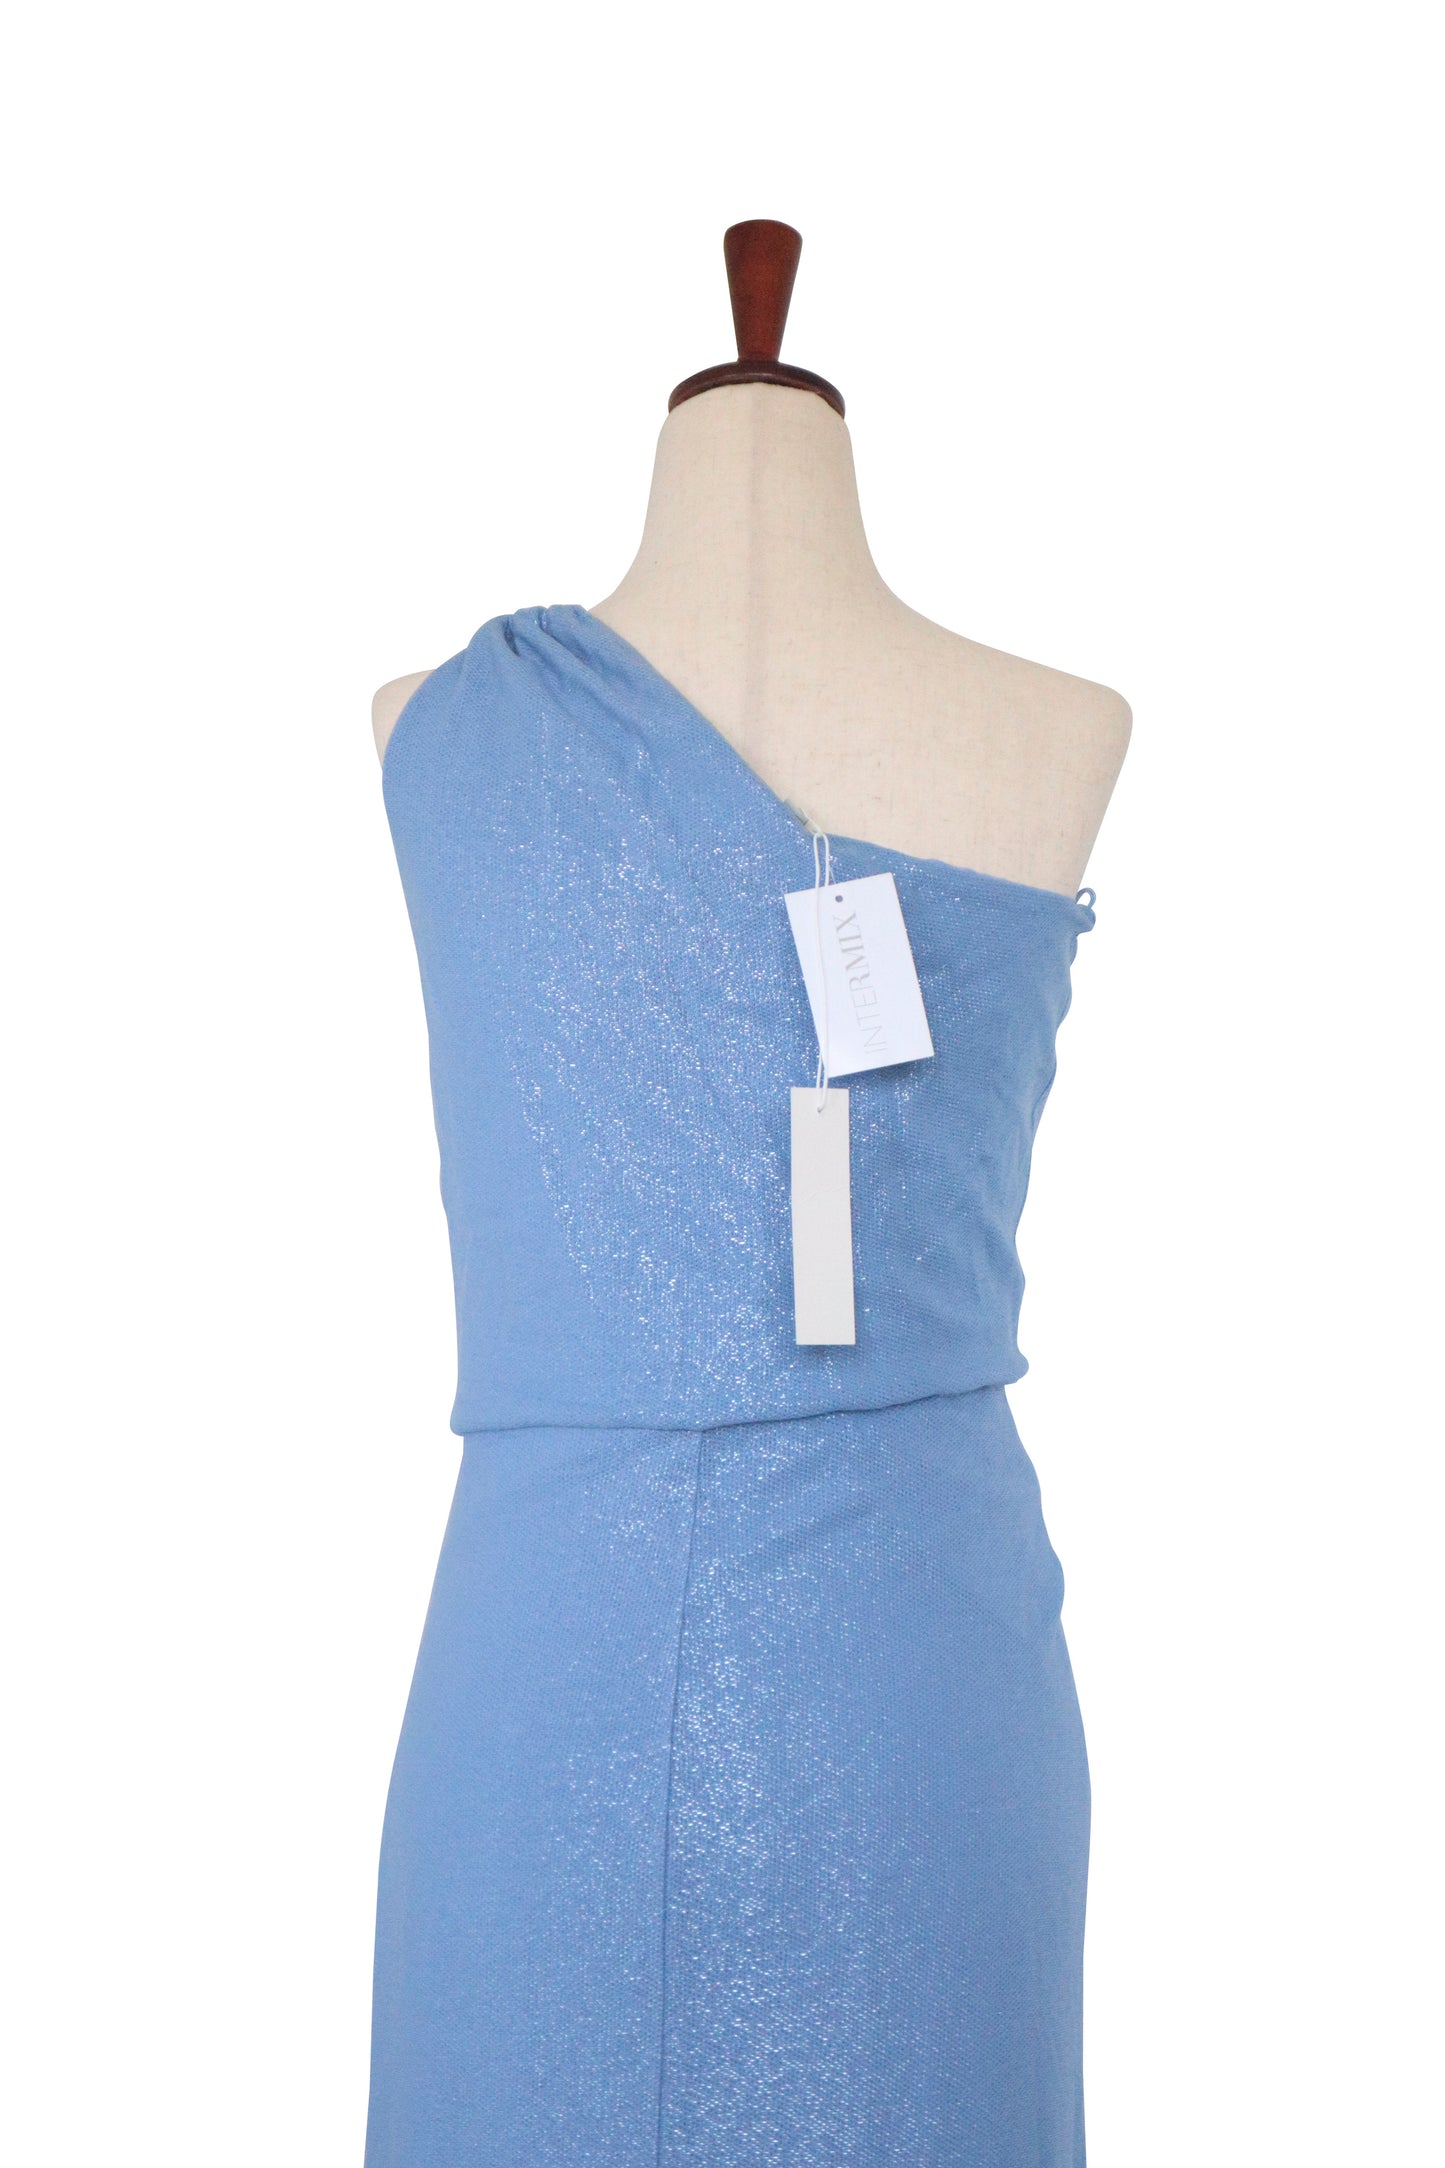 MICHELLE MASON - Light Blue Shimmer Dress W/ TAGS - Size M